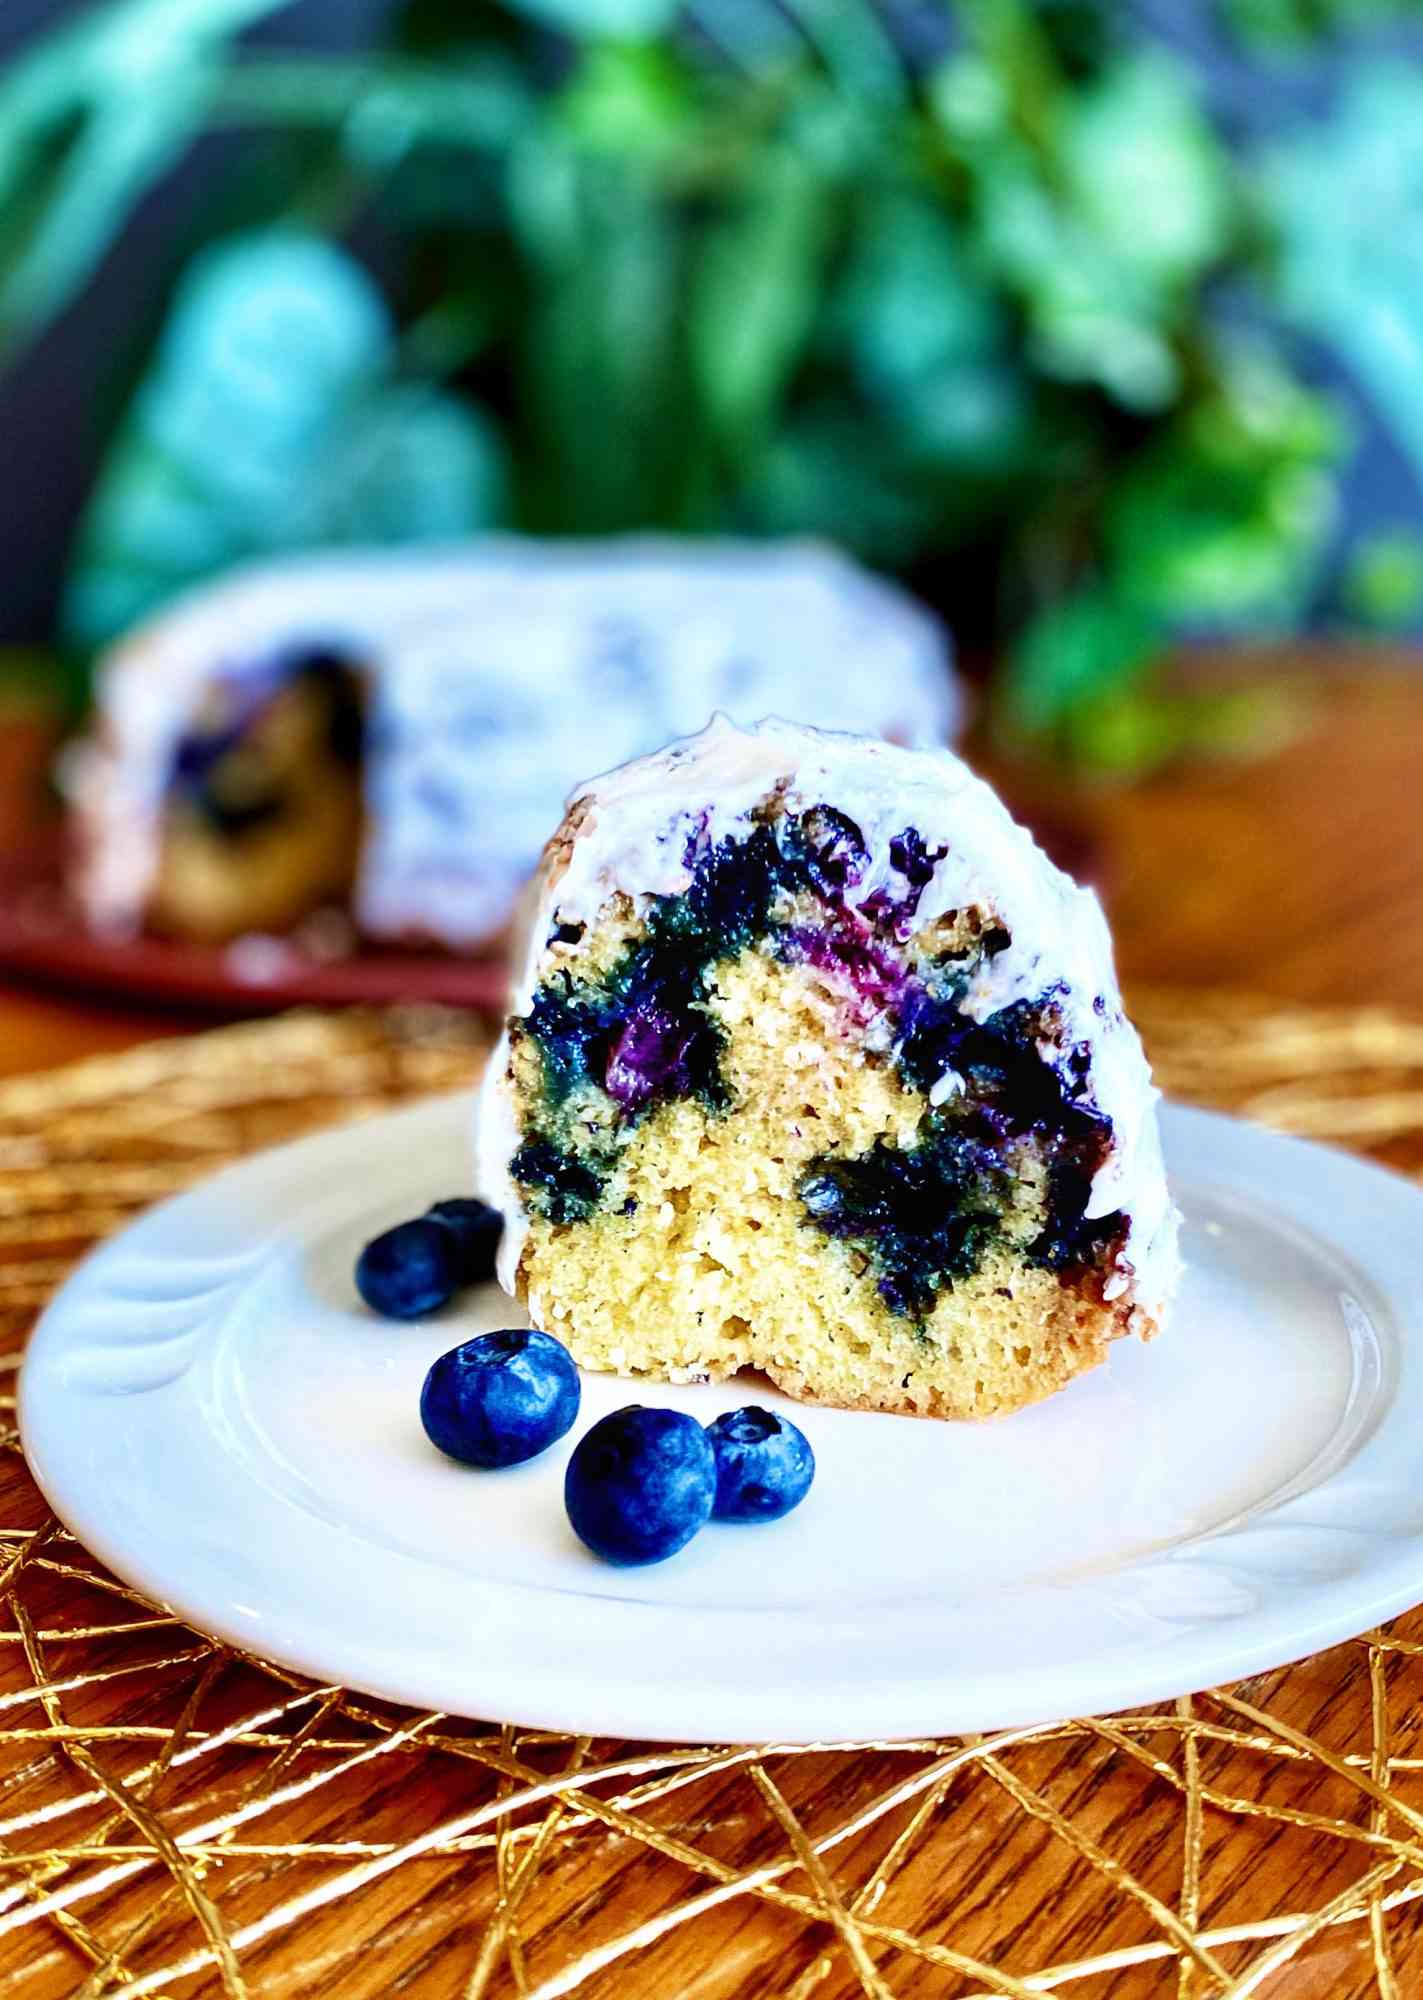 slice of blueberry poundcake with white glaze on white plate